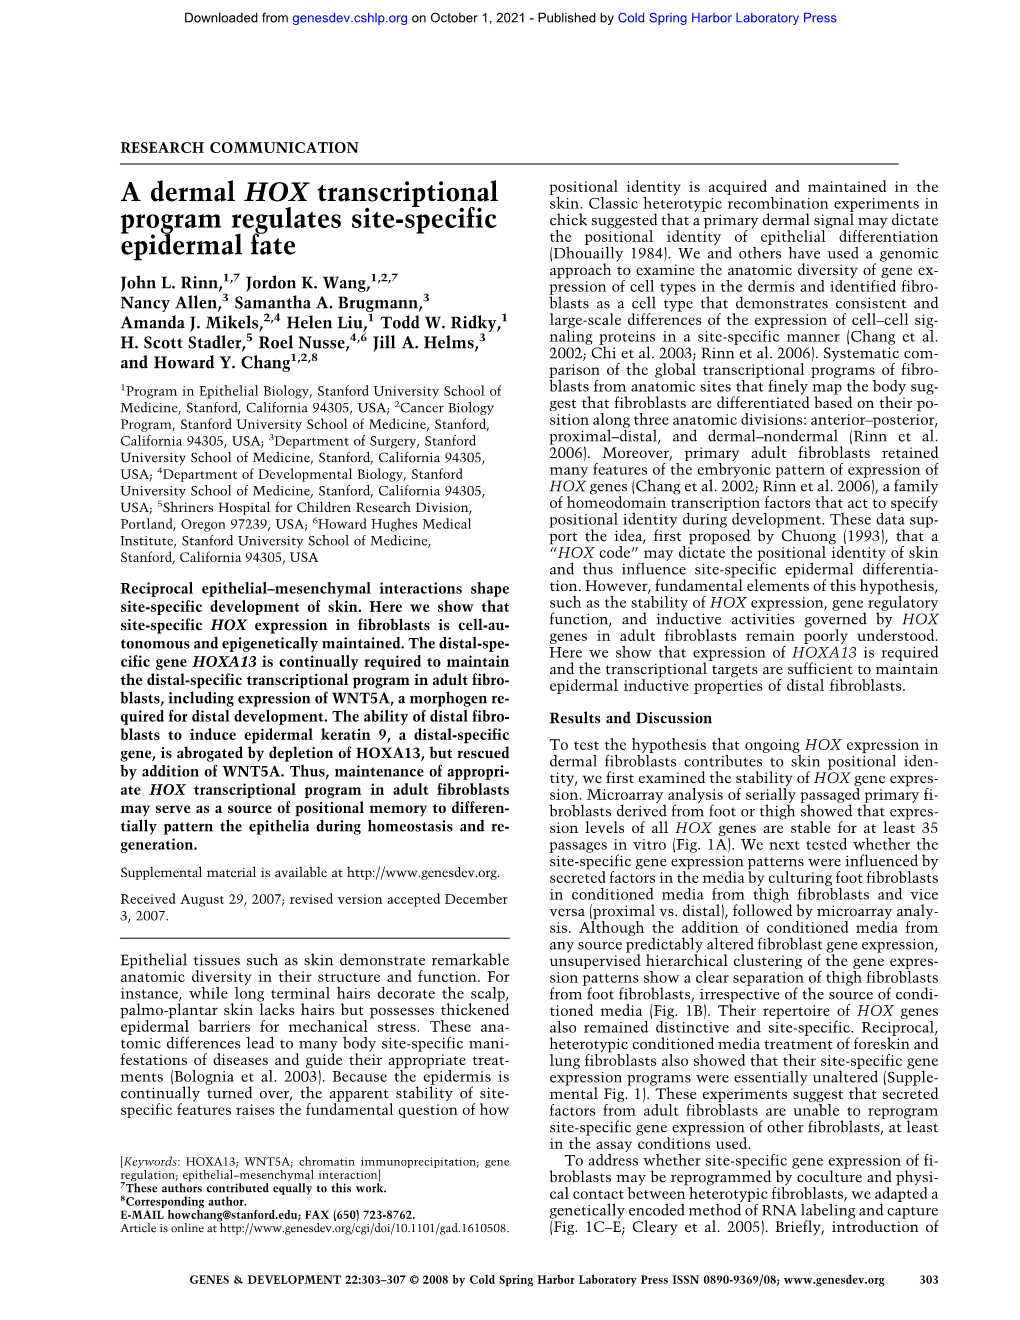 A Dermal HOX Transcriptional Program Regulates Site-Specific Epidermal Fate